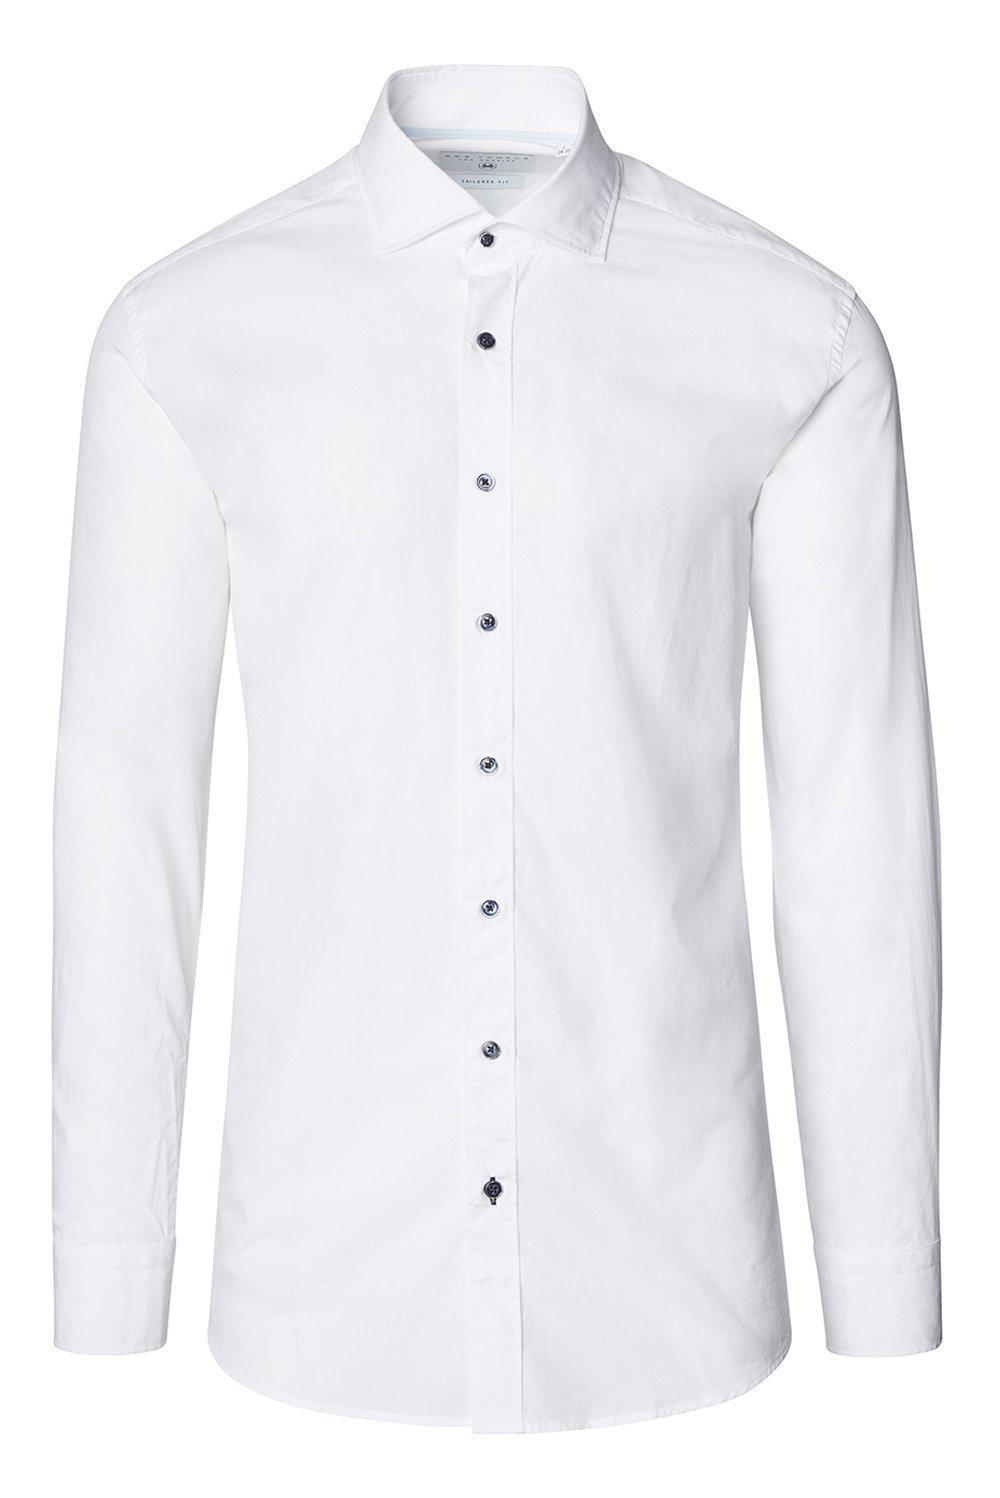 Organic Cotton Poplin Tonal Button Dress Shirt - White - Ron Tomson